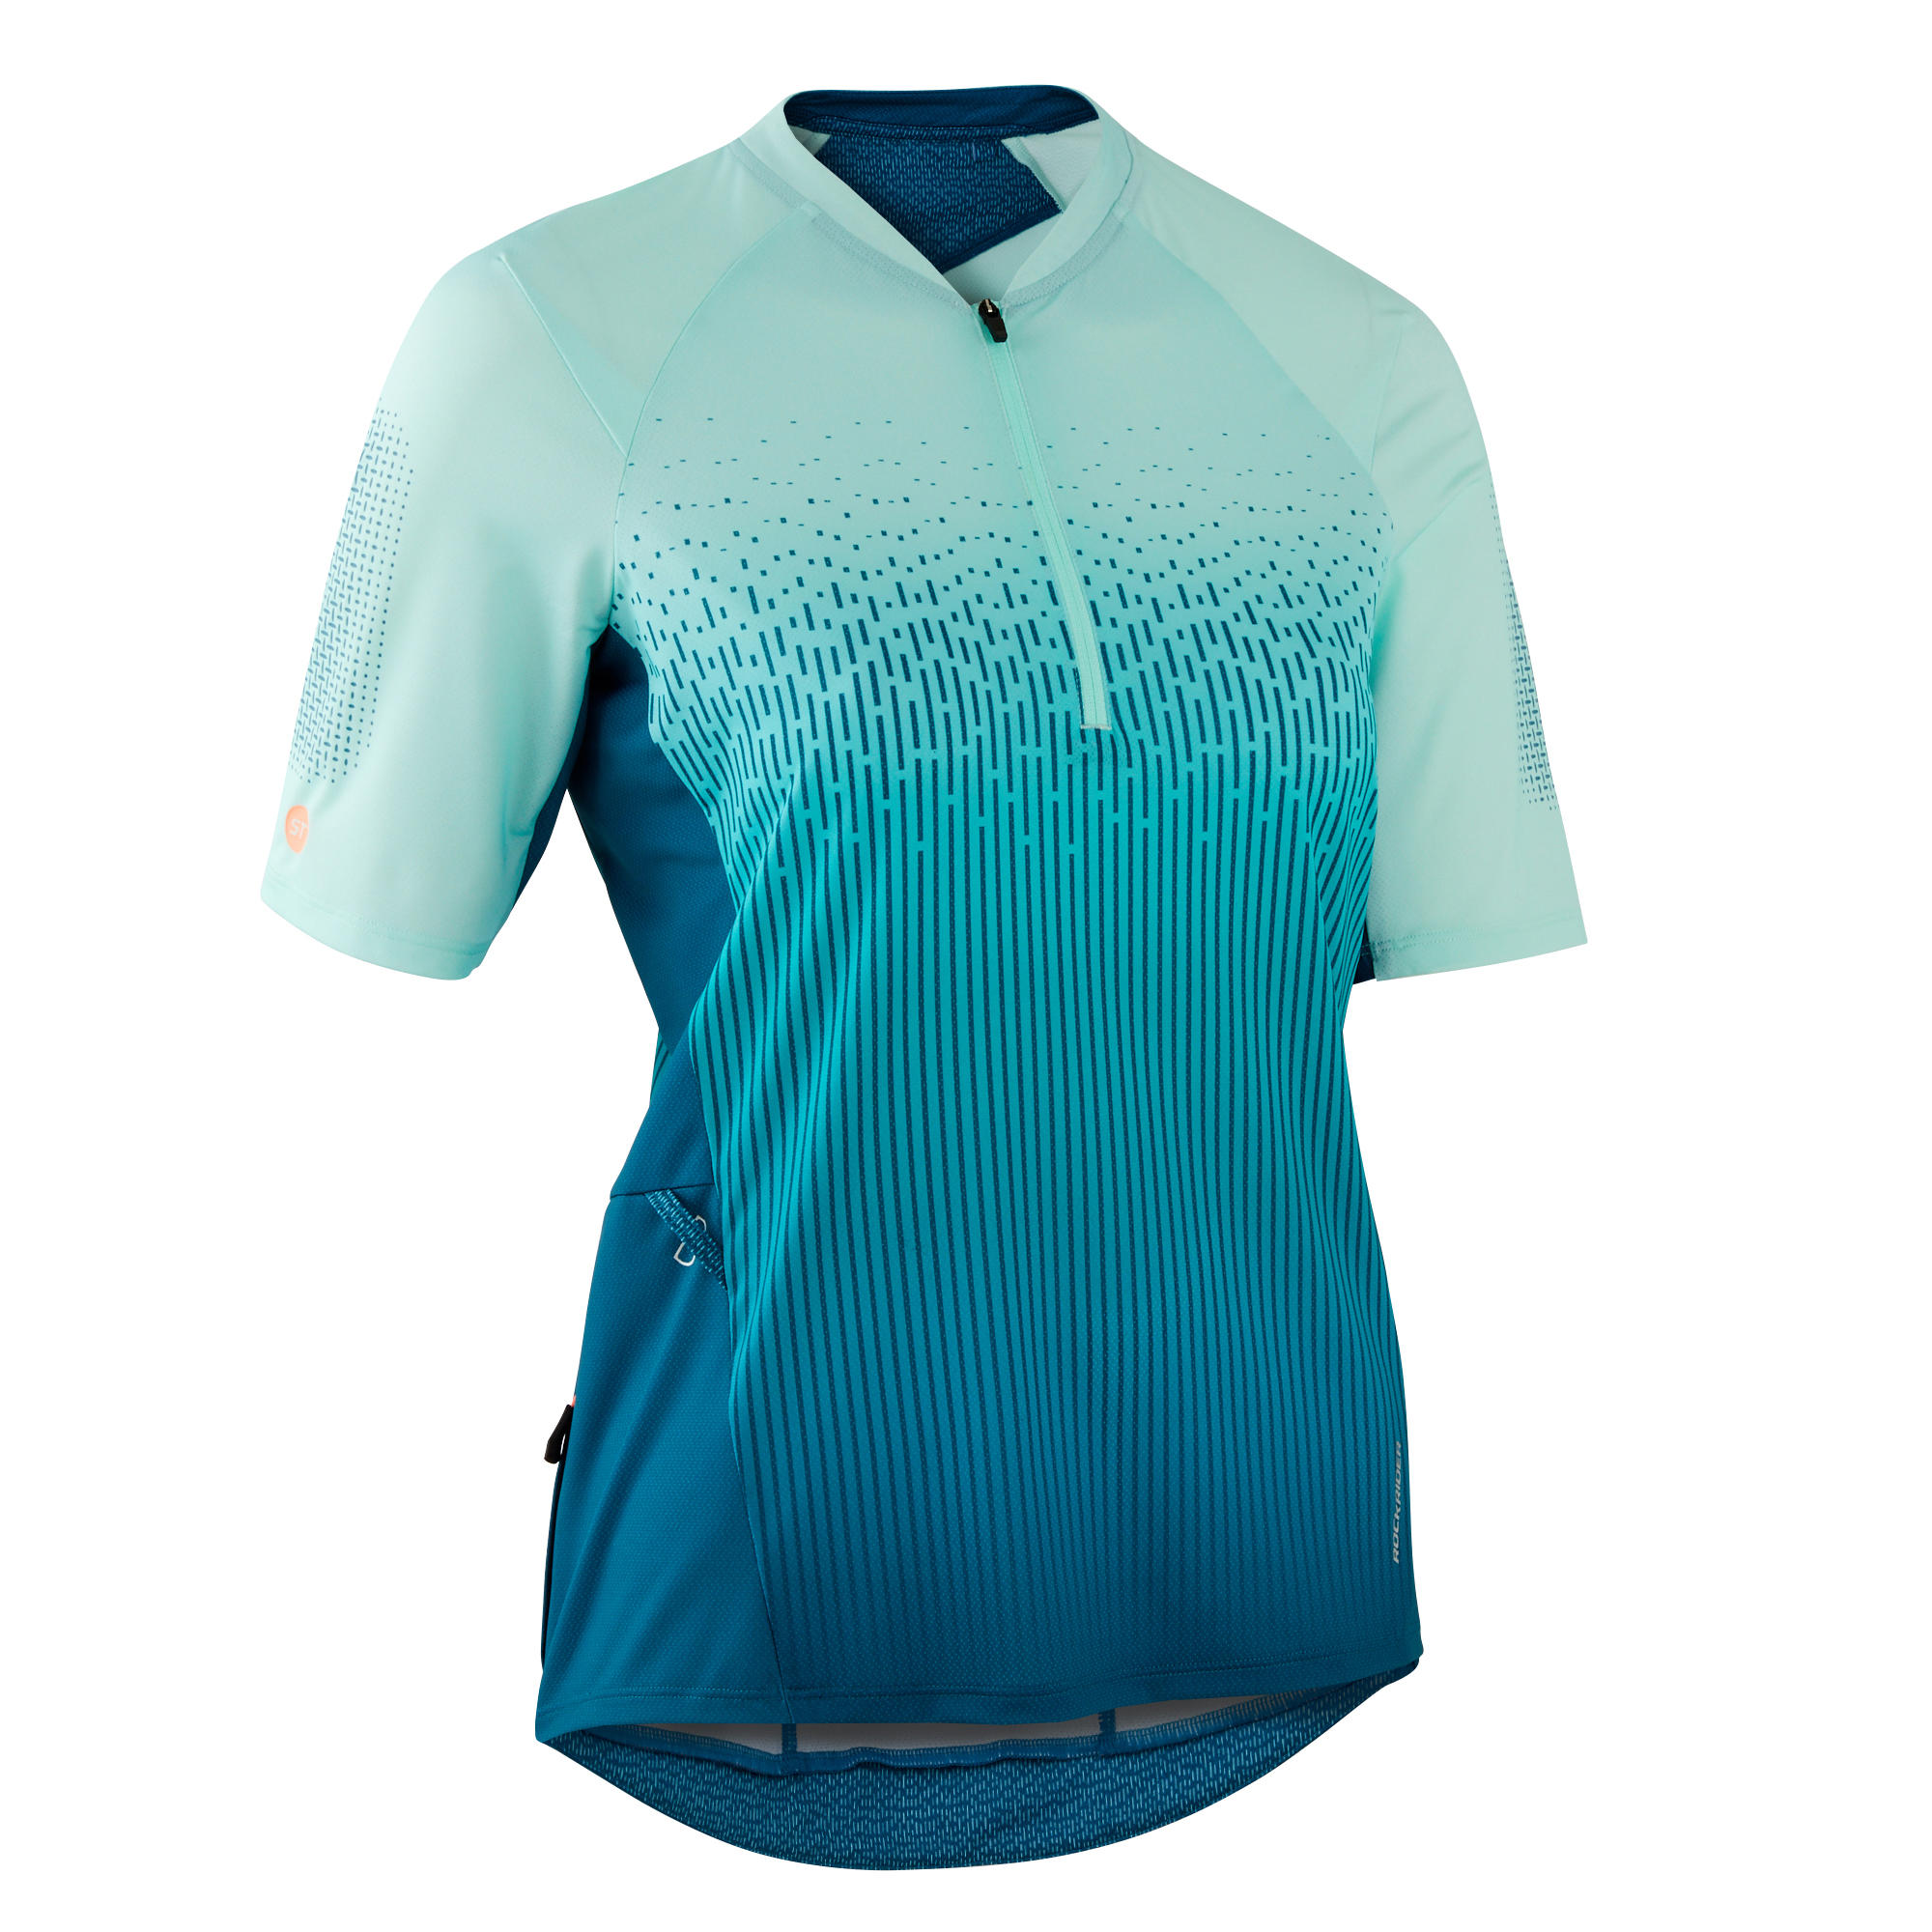 ROCKRIDER Women's Short-Sleeved Mountain Bike Jersey ST 500 - Turquoise